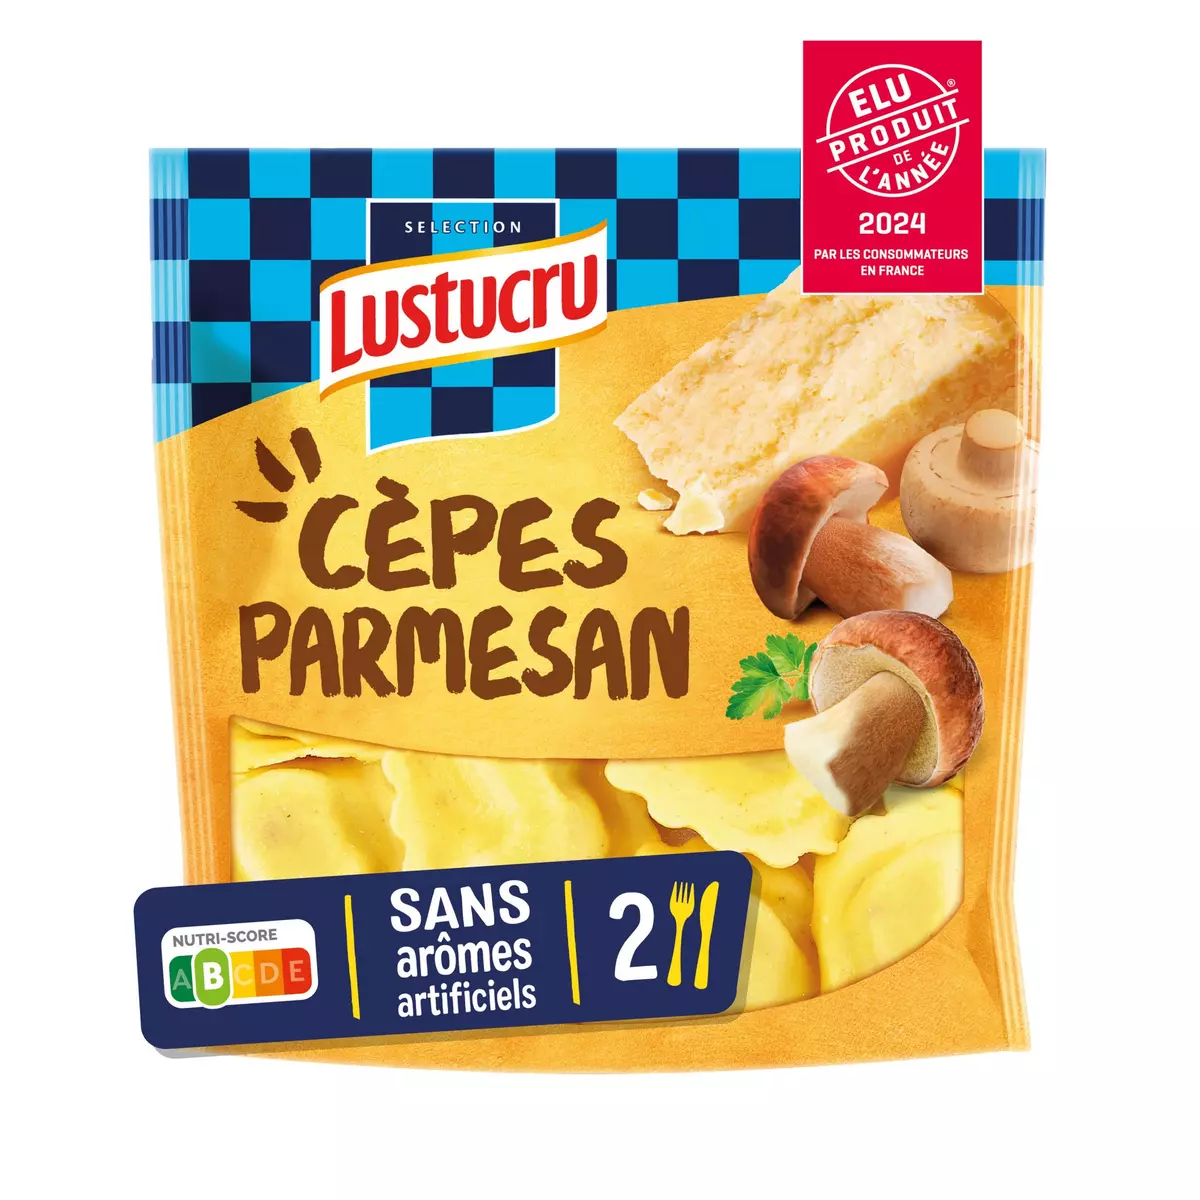 LUSTUCRU Girasoli cèpes parmesan 2 portions 250g